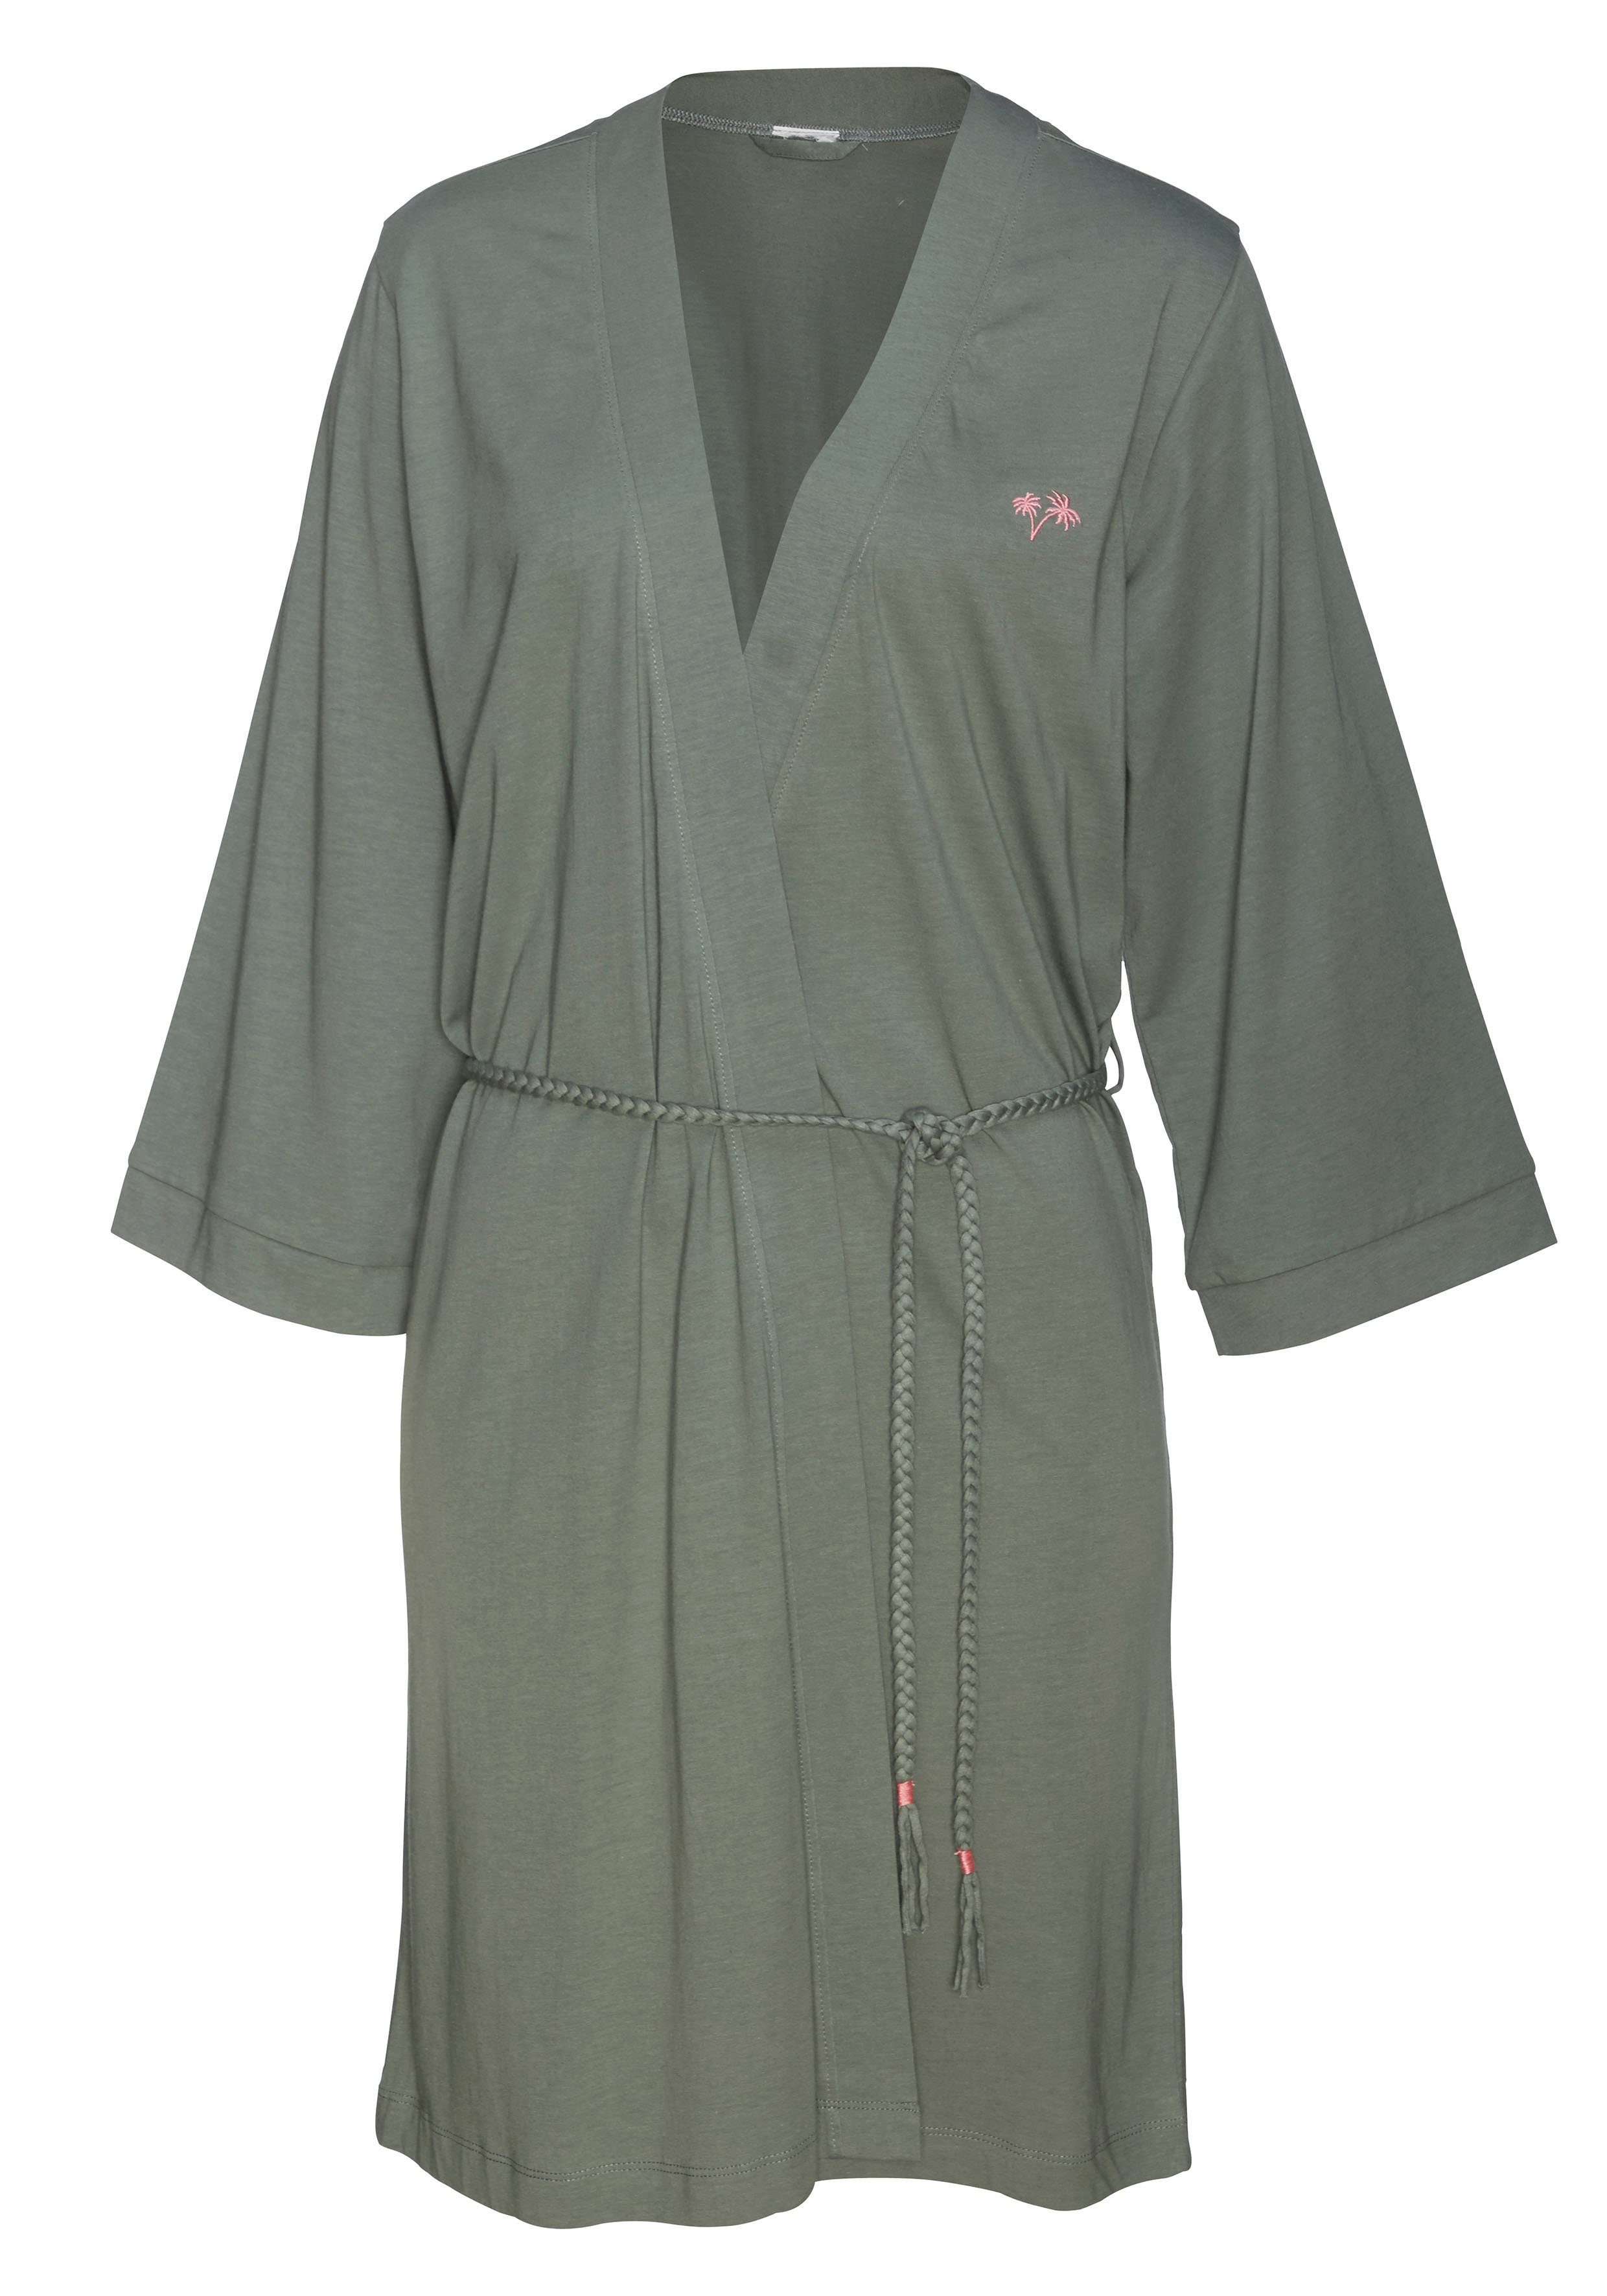 uni Kurzform, Kimono, Gürtel, Baumwoll-Mix, mit khaki Dreams oder Vivance floralem Druck Kimono-Kragen,